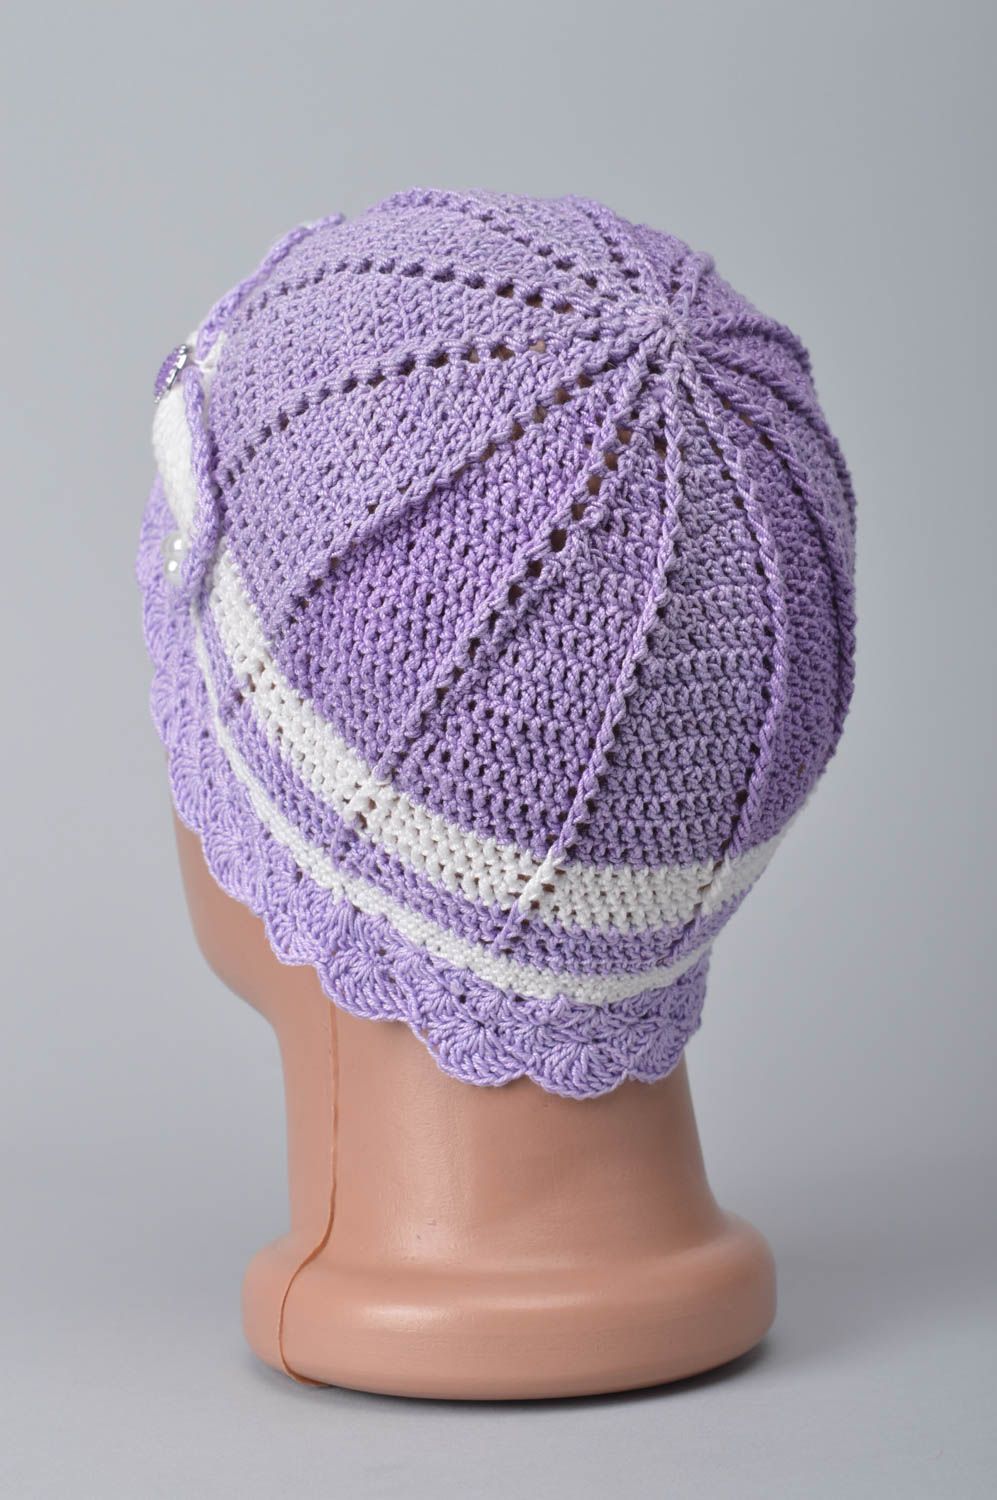 Unusual handmade crochet hat designs cute hats designer accessories for girls photo 5